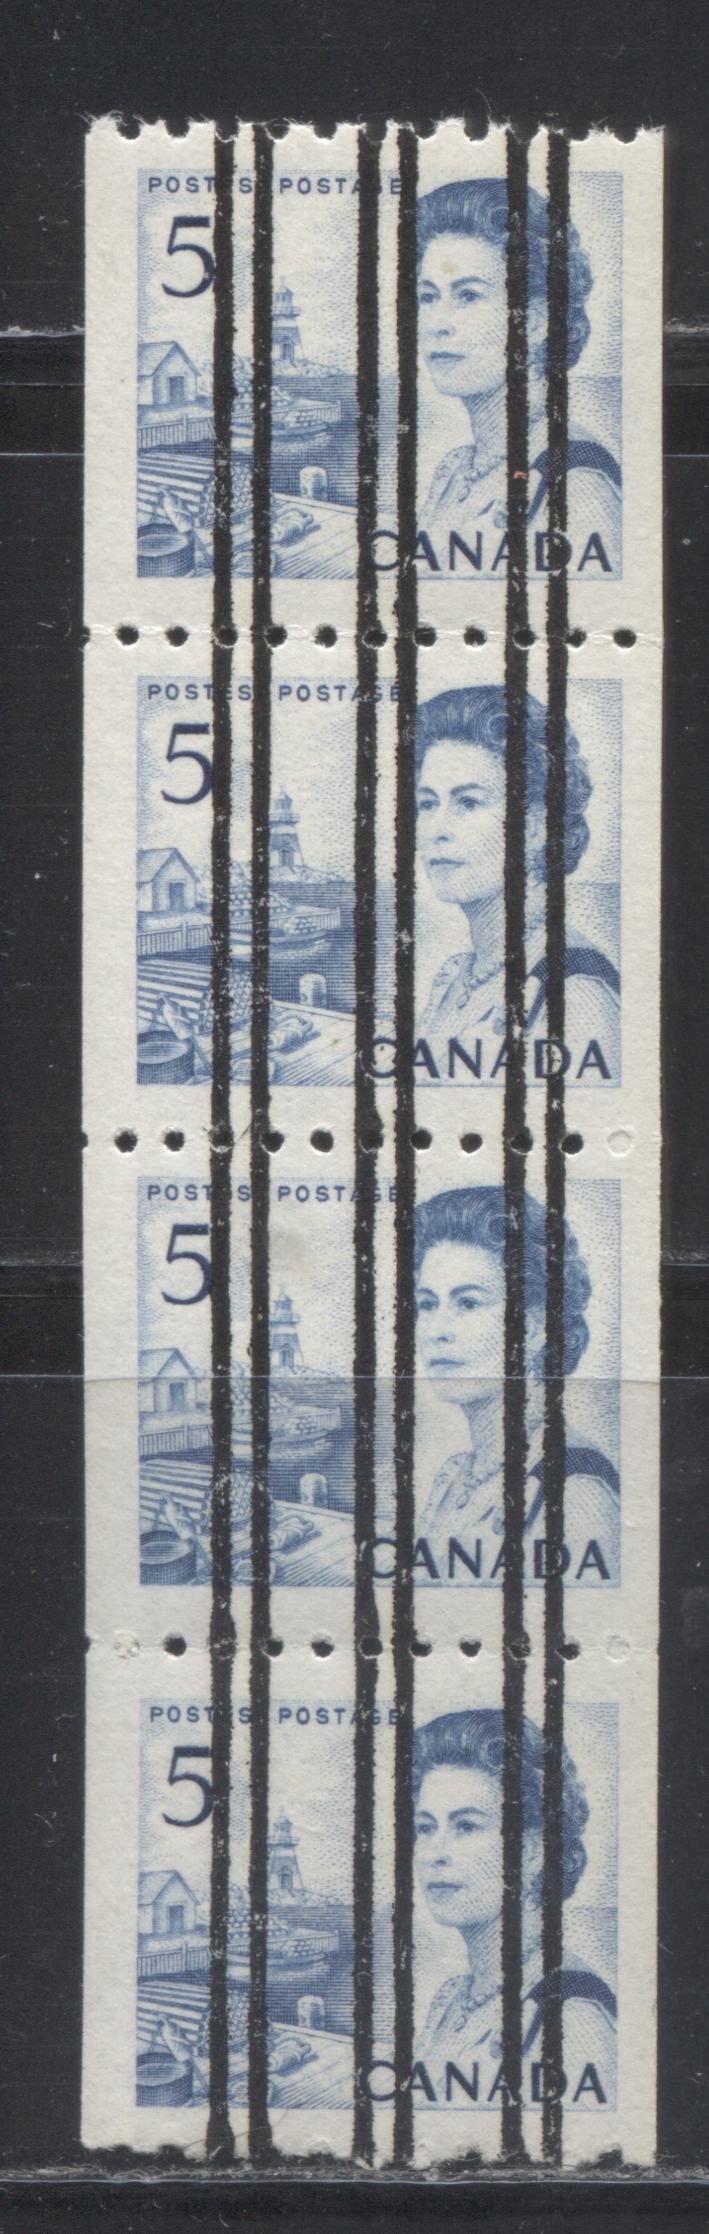 Lot 242 Canada #468xxvar 5c Blue Fishing Village, 1967-1973 Centennial Definitive Issue, A VFNH Precancelled Wide Spacing Coil Strip, DF-fl Bluish White, Vertical Wove, Smooth Dex